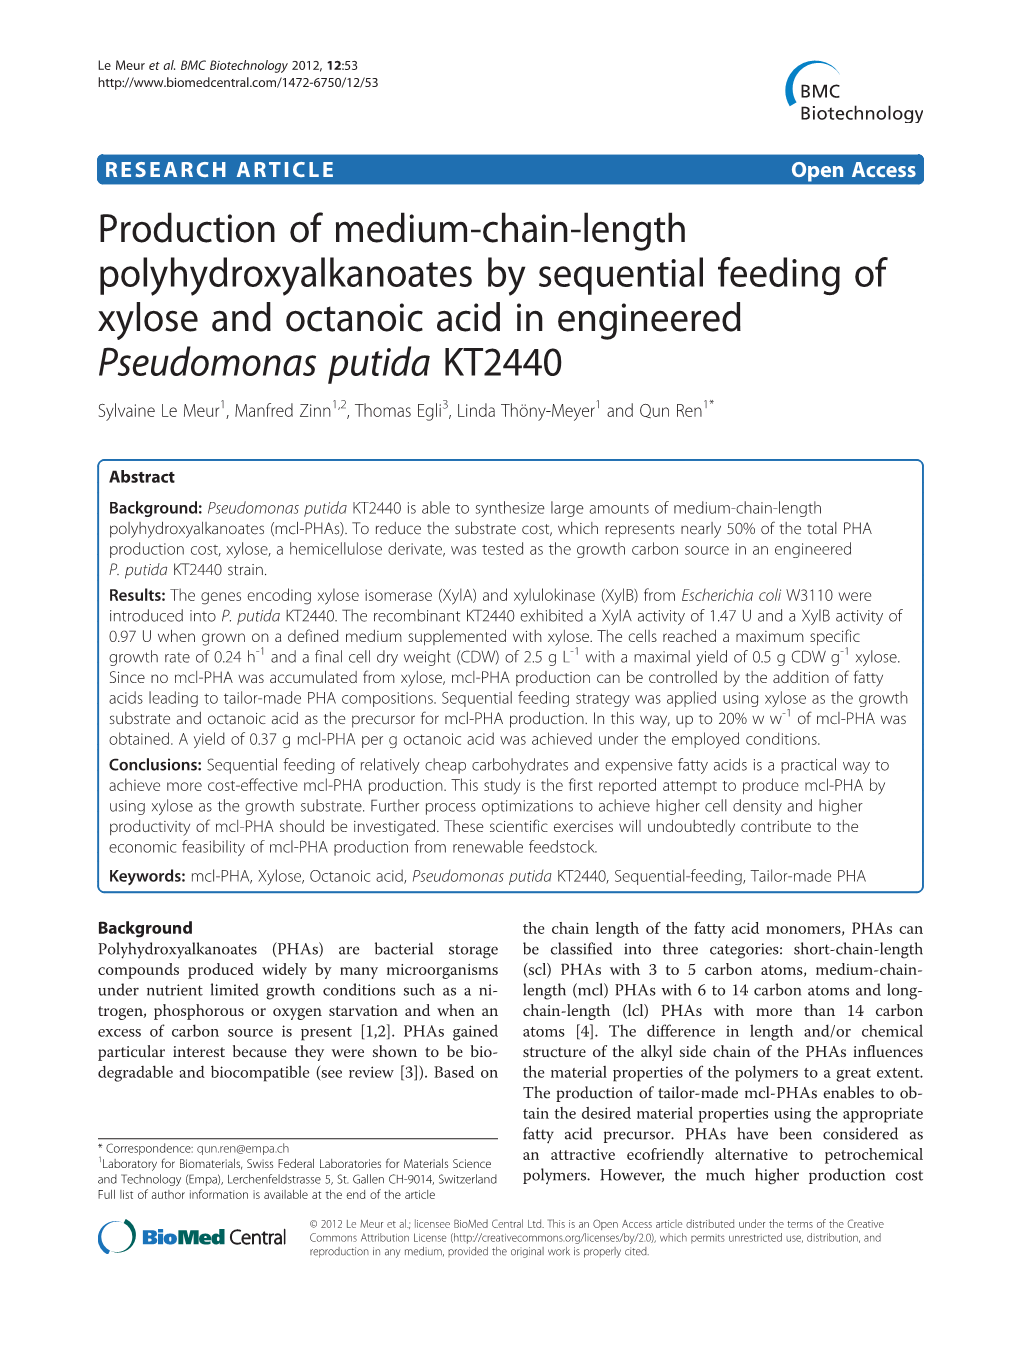 Production of Medium-Chain-Length